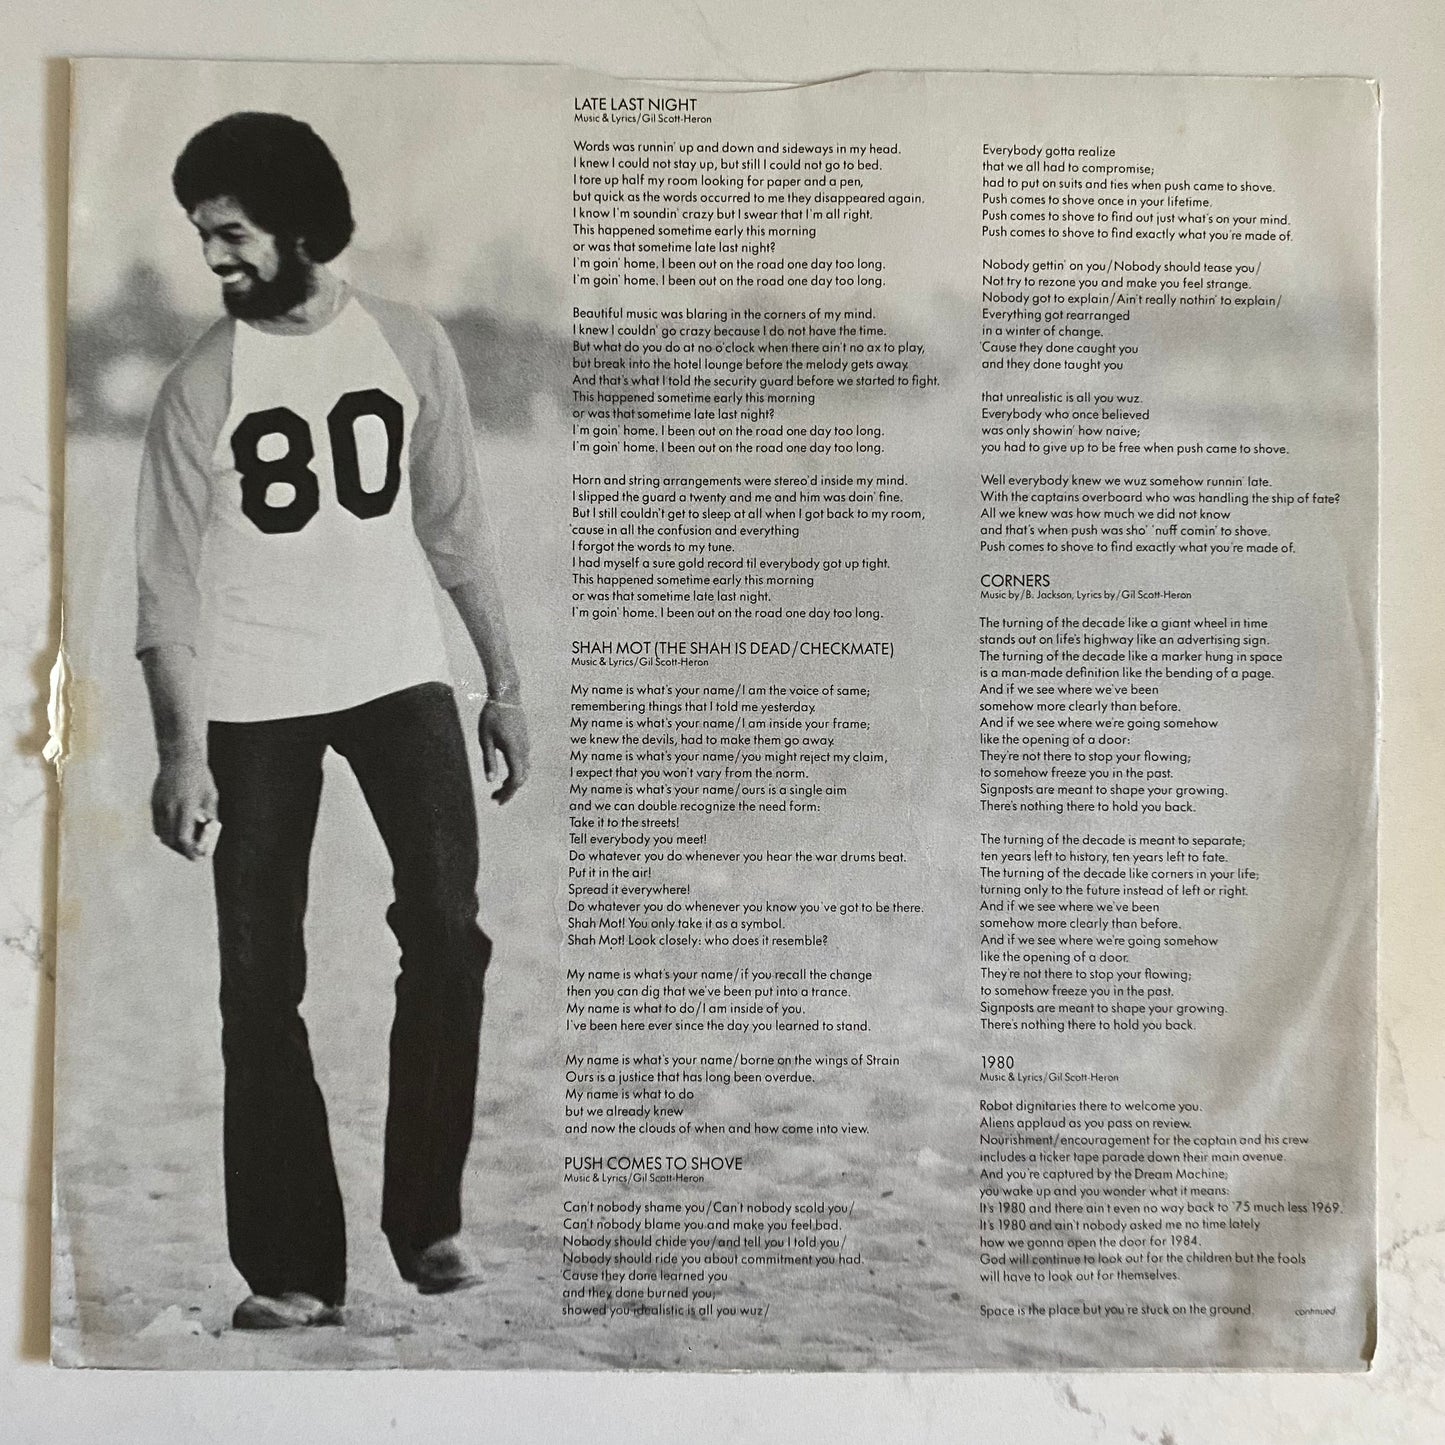 Gil Scott-Heron & Brian Jackson - 1980 (LP, Album, San). FUNK